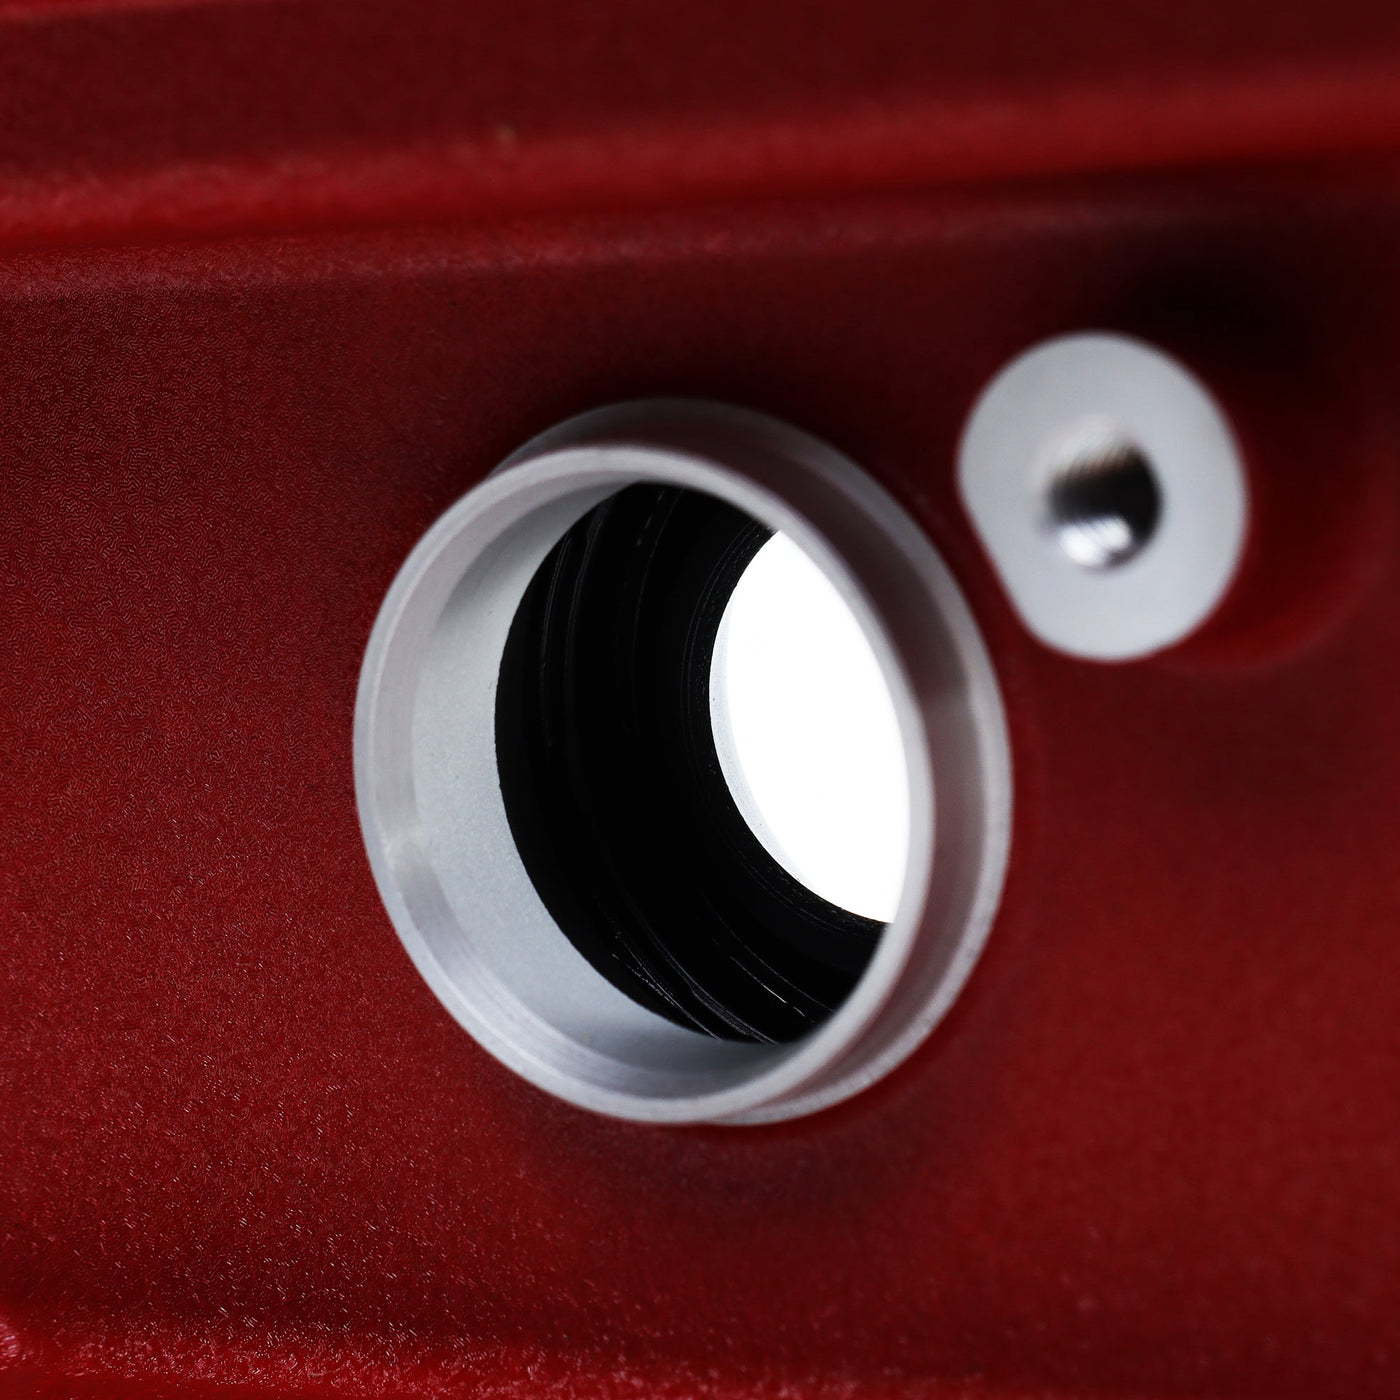 S2000 Valve Cover (Red) 12310-PCX-020 OHA-12310-PCX-020